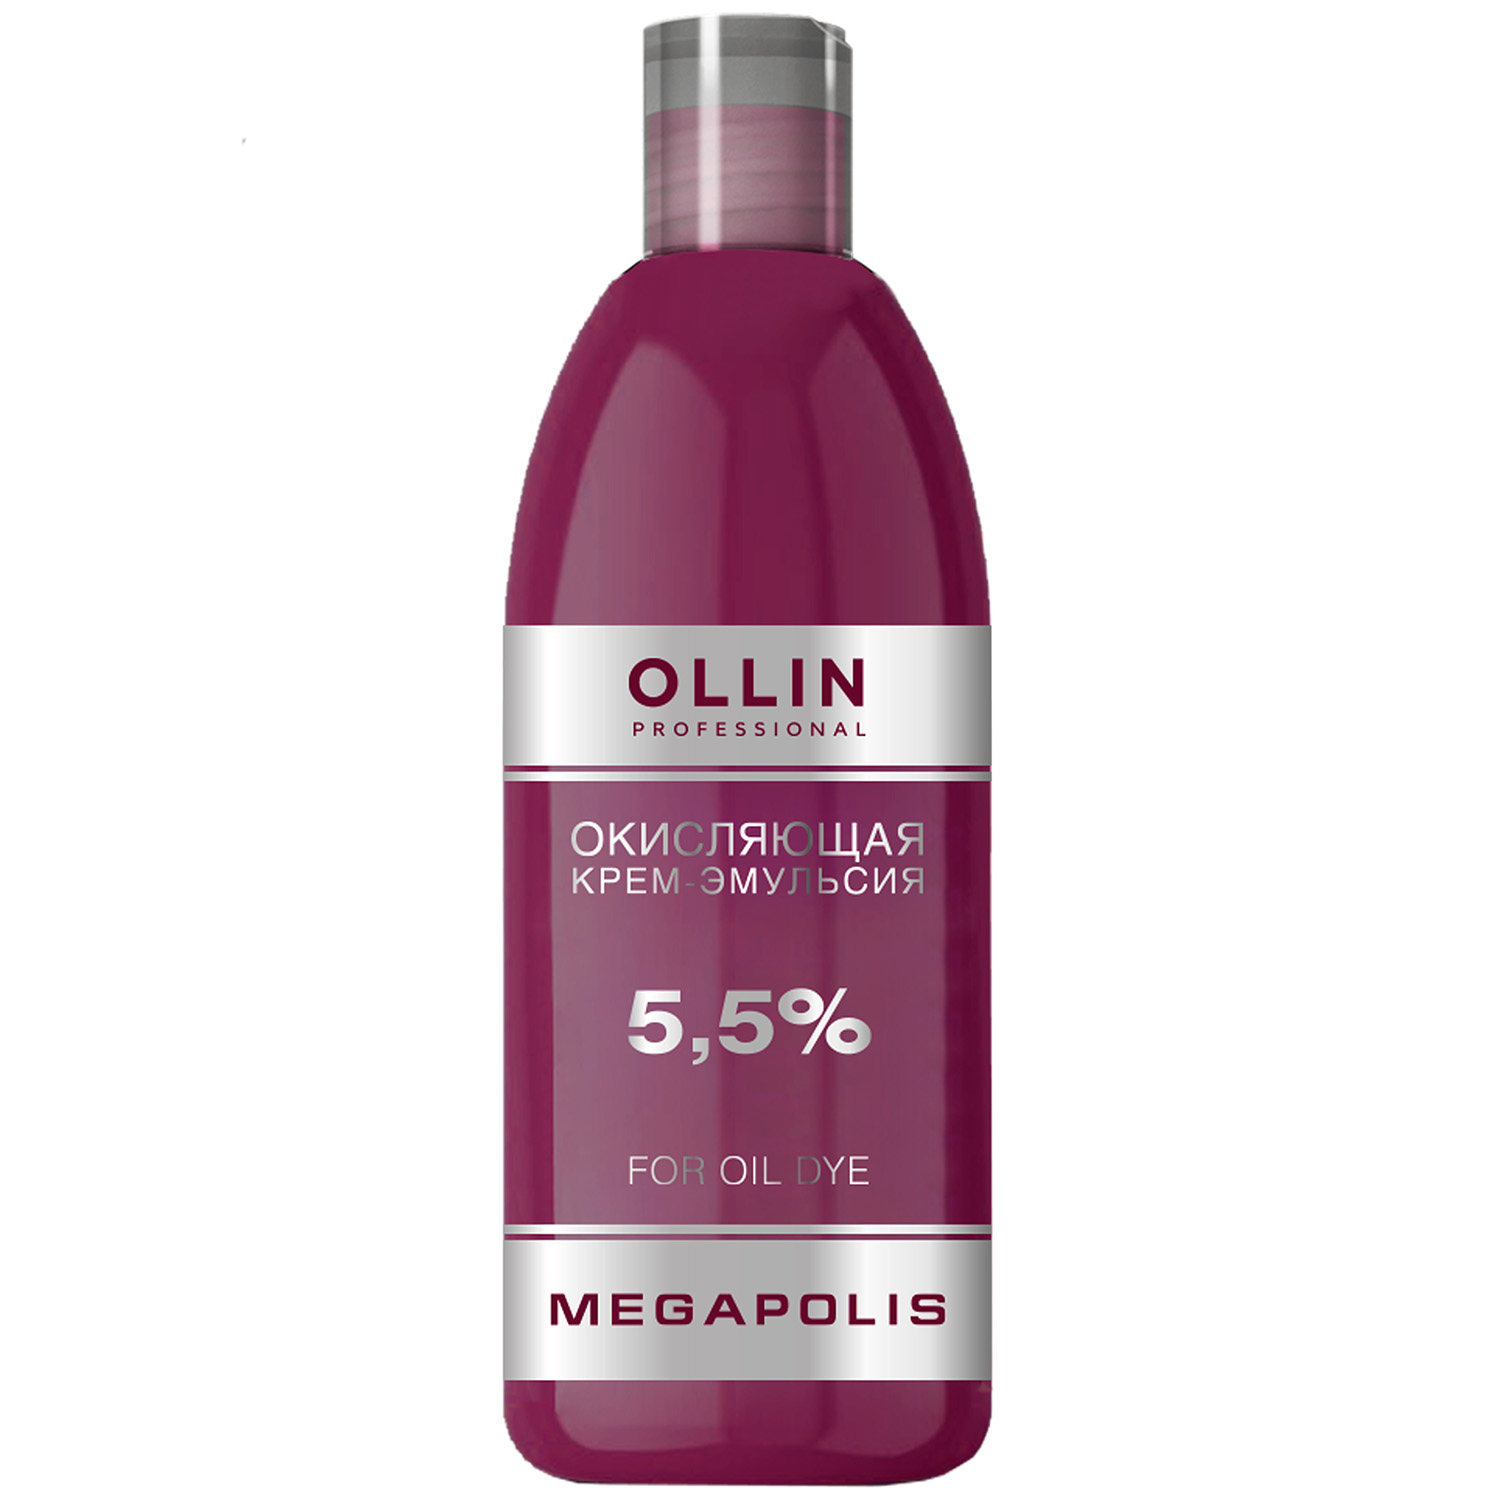 Ollin Professional Окисляющая крем-эмульсия 5,5%, 500 мл (Ollin Professional, Megapolis)